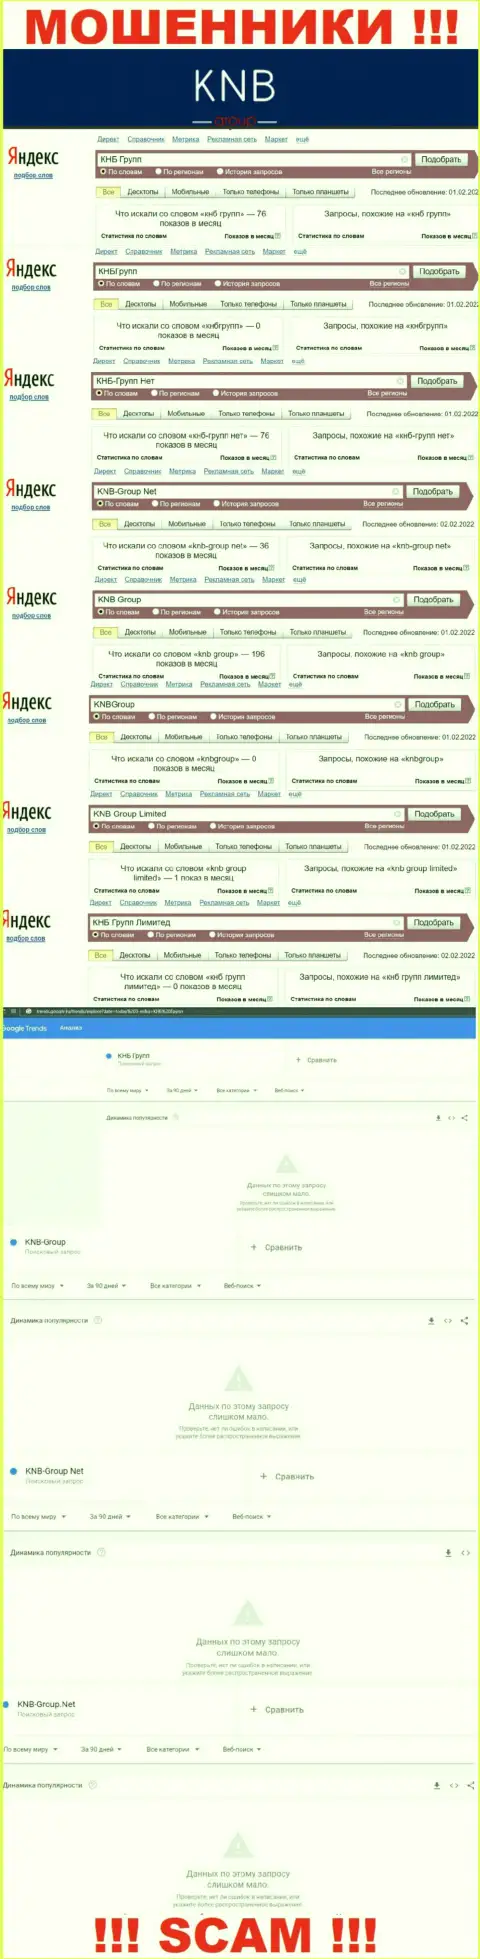 Скрин результата онлайн-запросов по противозаконно действующей компании KNB Group